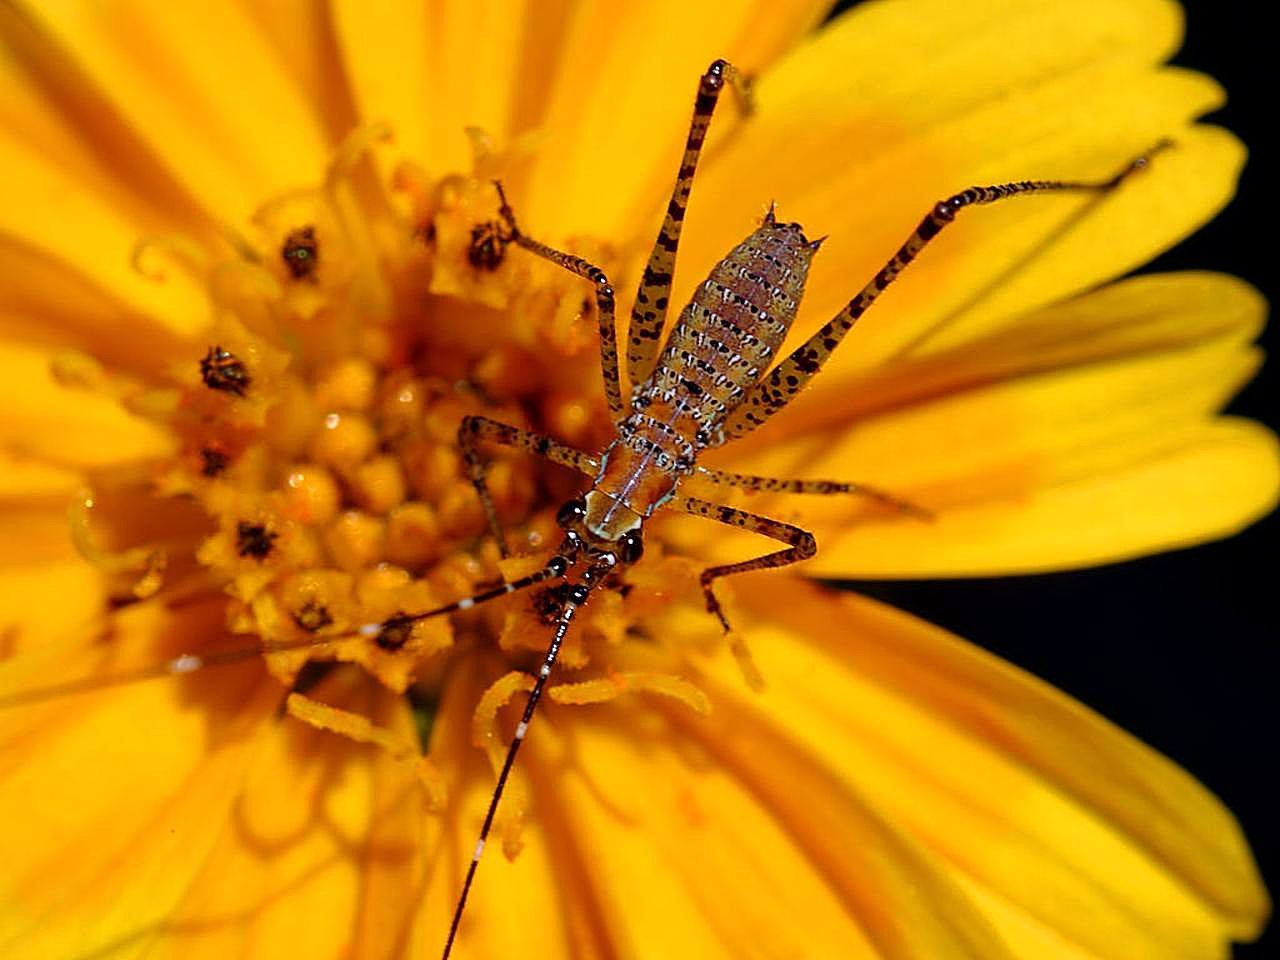 Оранжевый комар. Желтые насекомые. Большое желтое насекомое. Оранжевое насекомое картинка. Фотография насекомое солнышко.